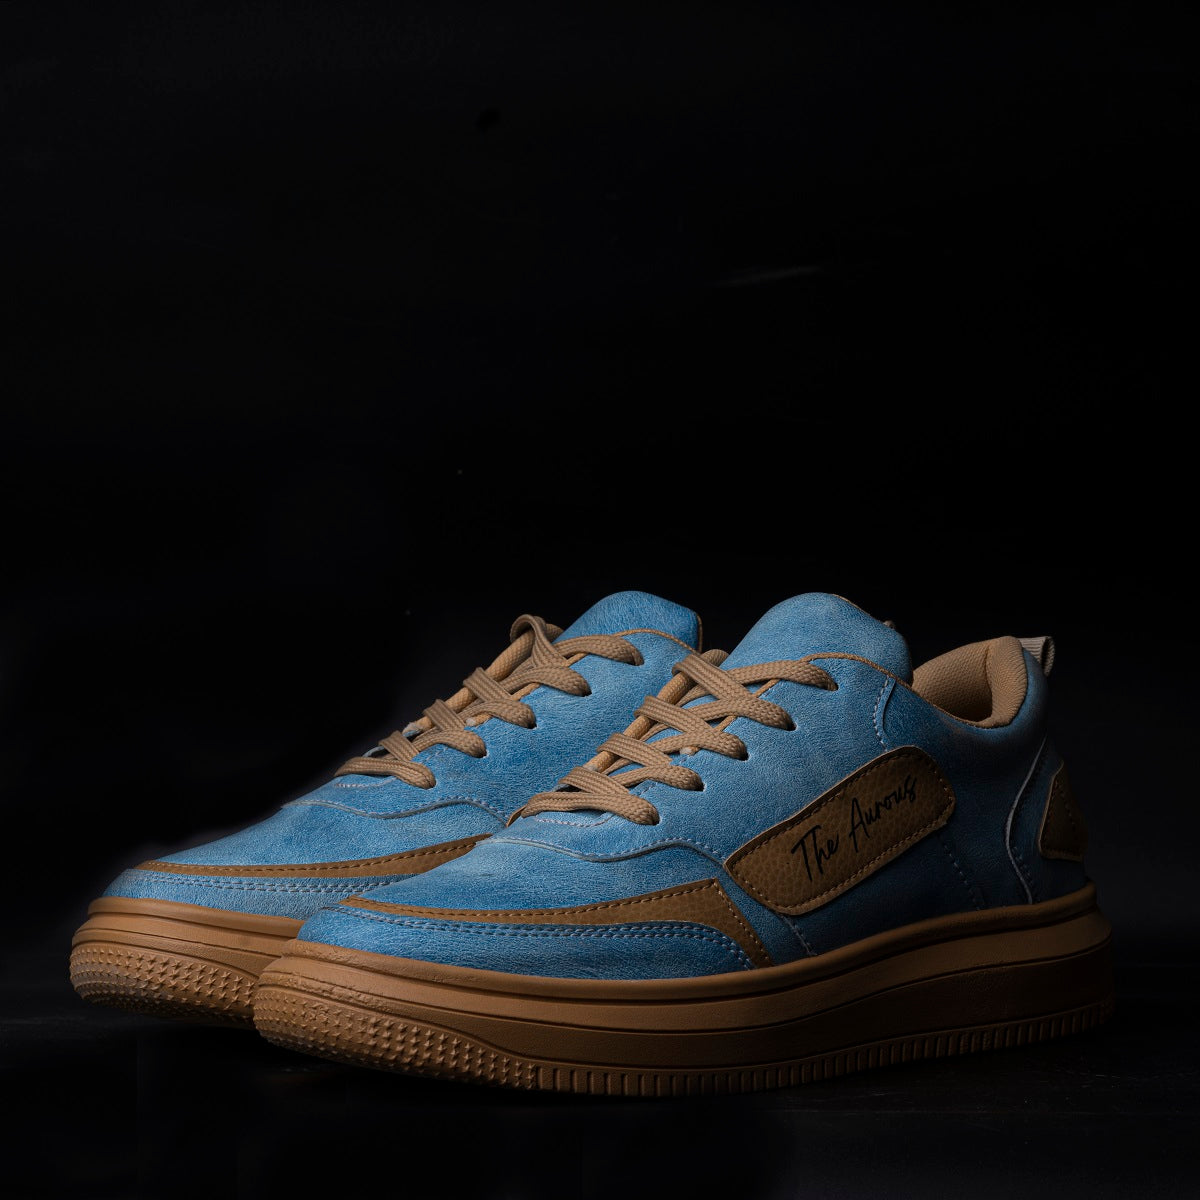 The Aurous Windstorm Ocean Blue Laceup Sneakers